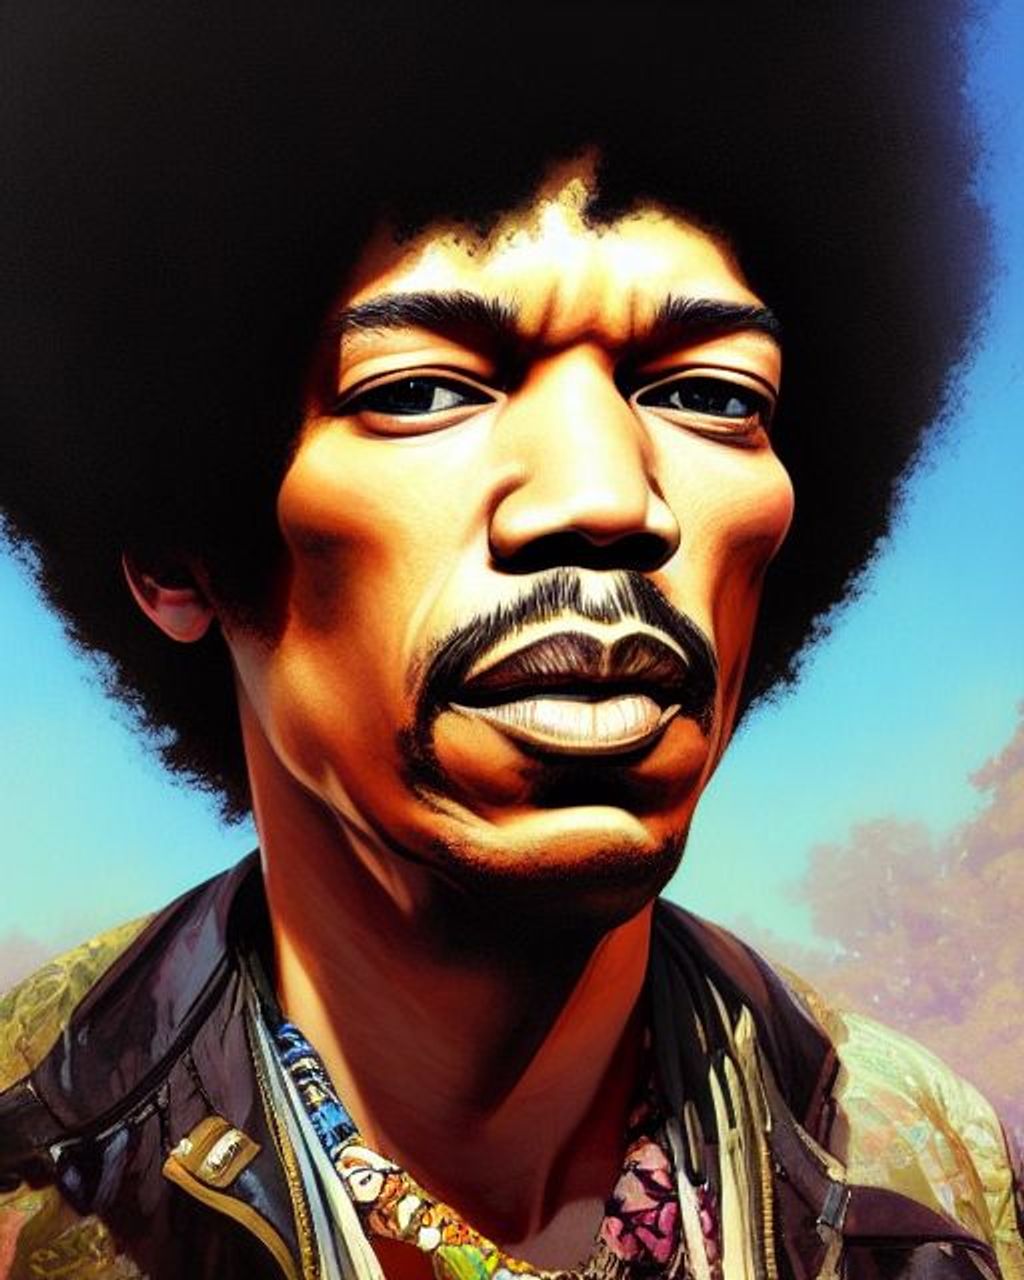 Prompt: Portrait of Jimi Hendrix